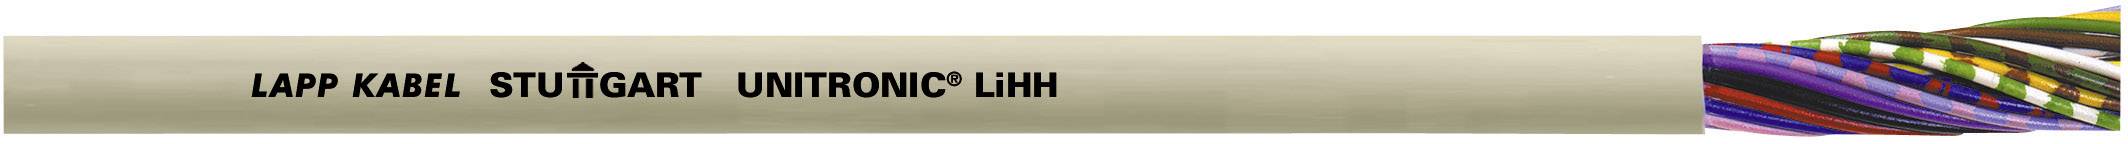 LAPP 37122-1 Datenleitung UNITRONIC LiHH 4 x 0.25 mm² Kieselgrau (RAL 7032) Meterware